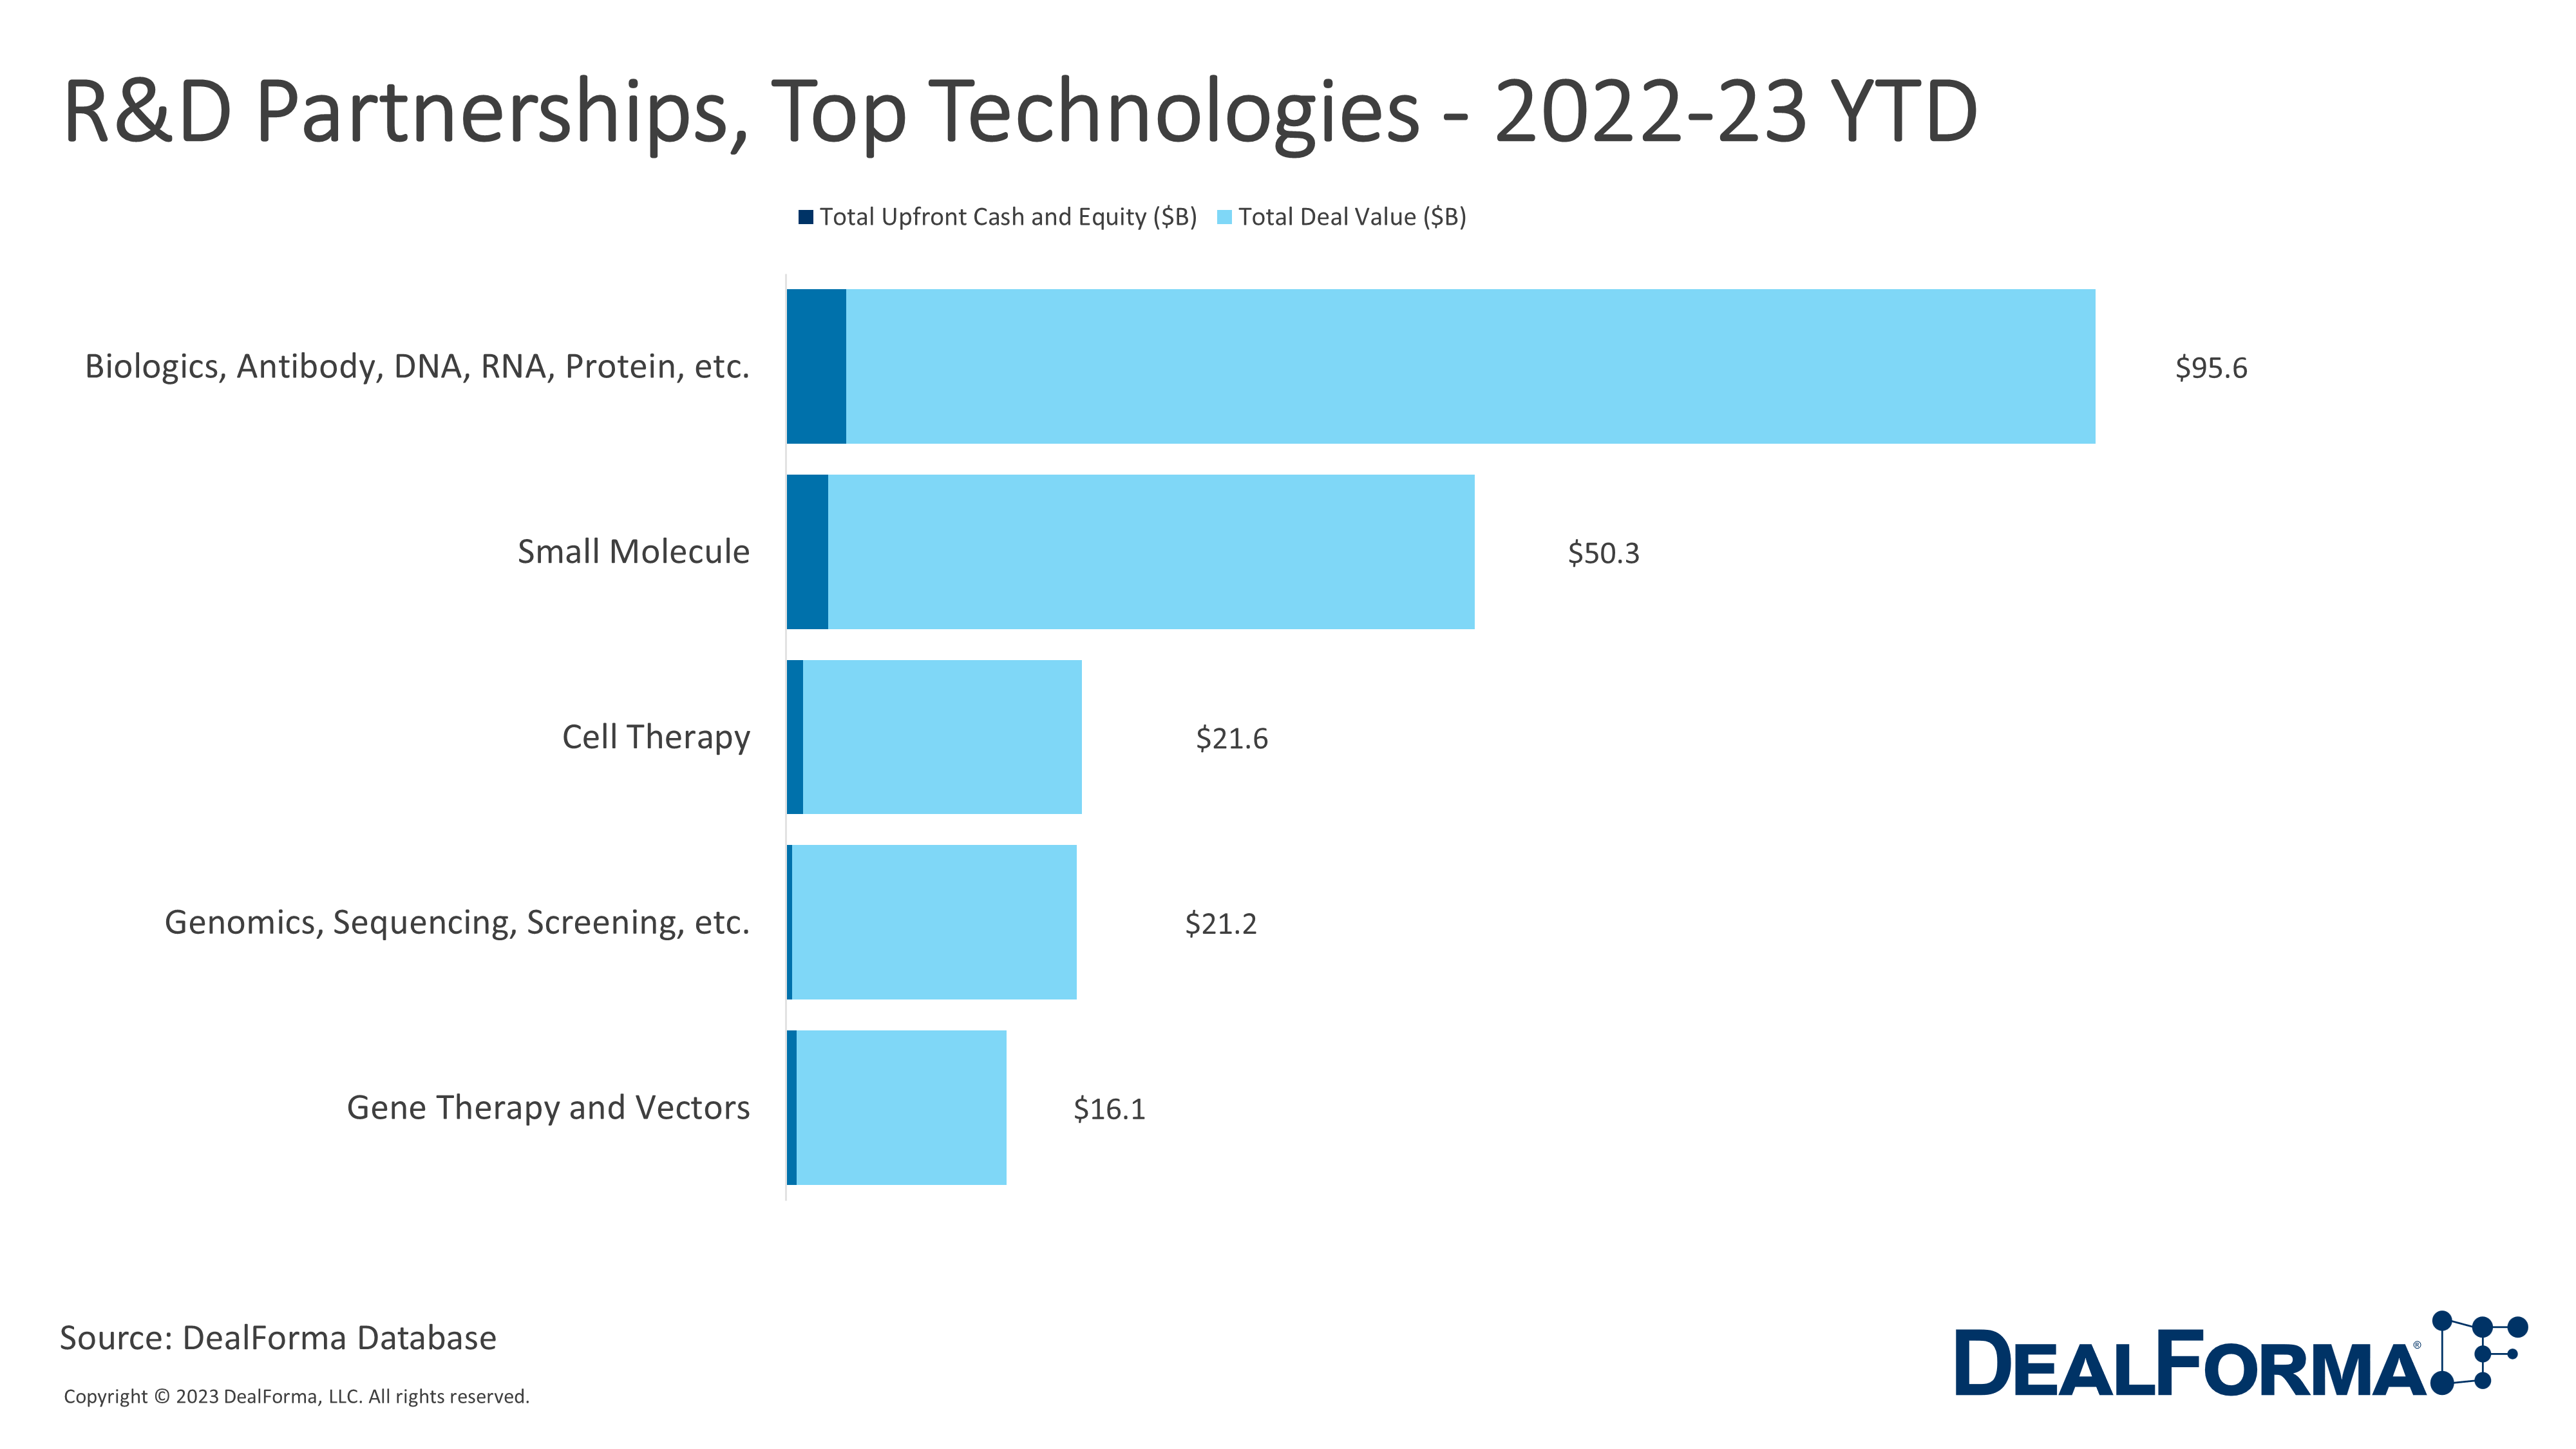 R&D Partnerships, Top Technologies - 2022-23 YTD. DealForma